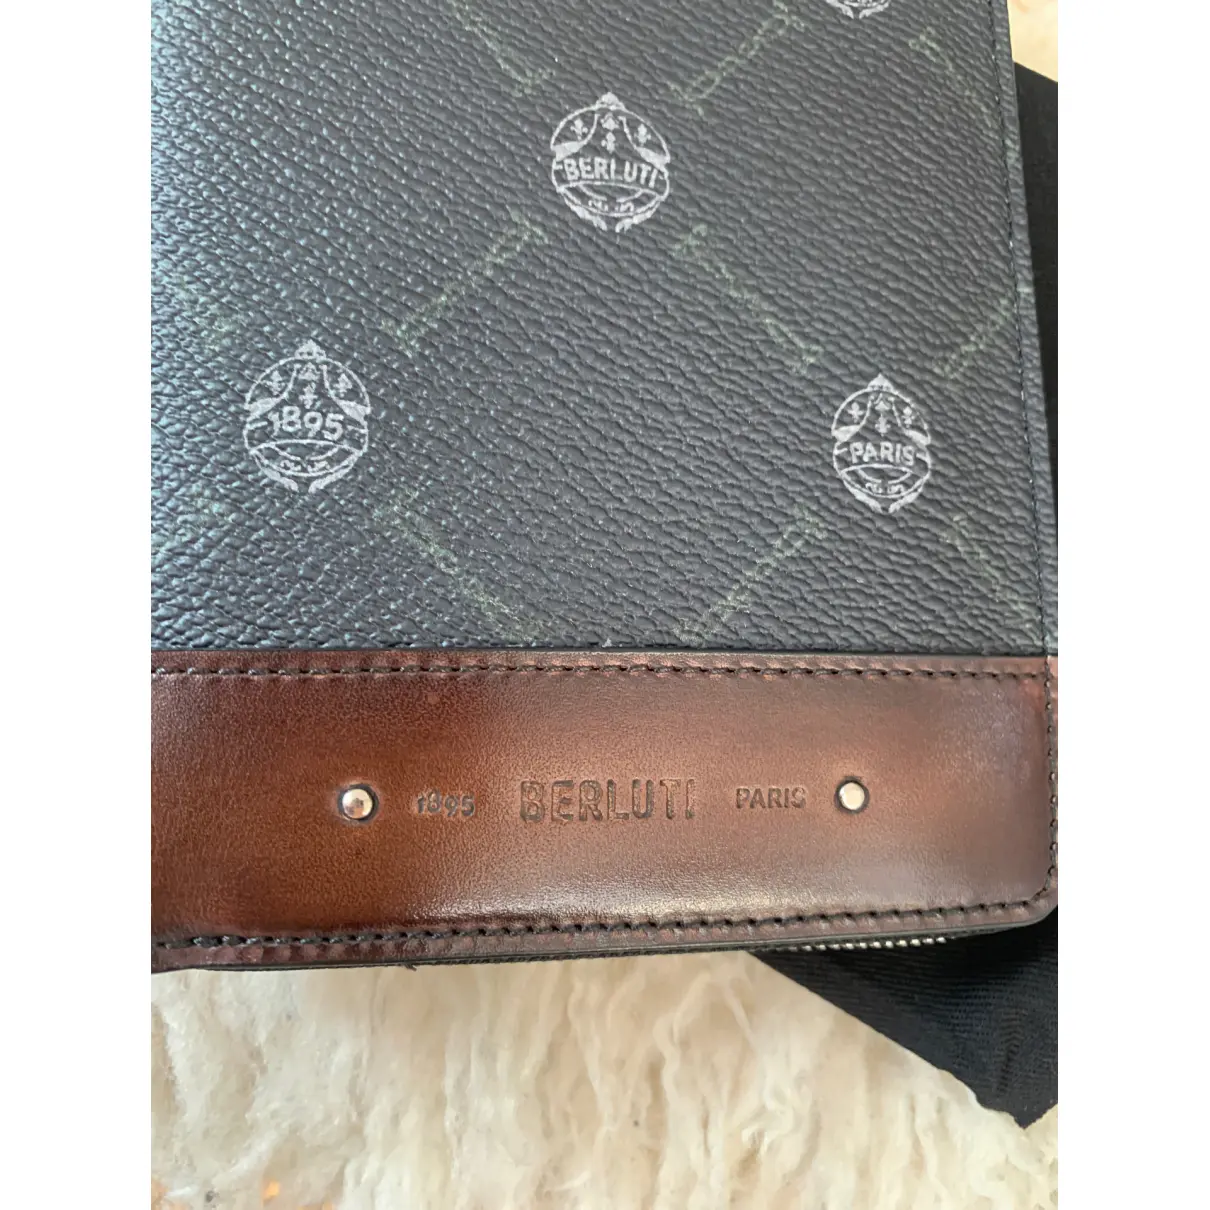 Buy Berluti Cloth small bag online